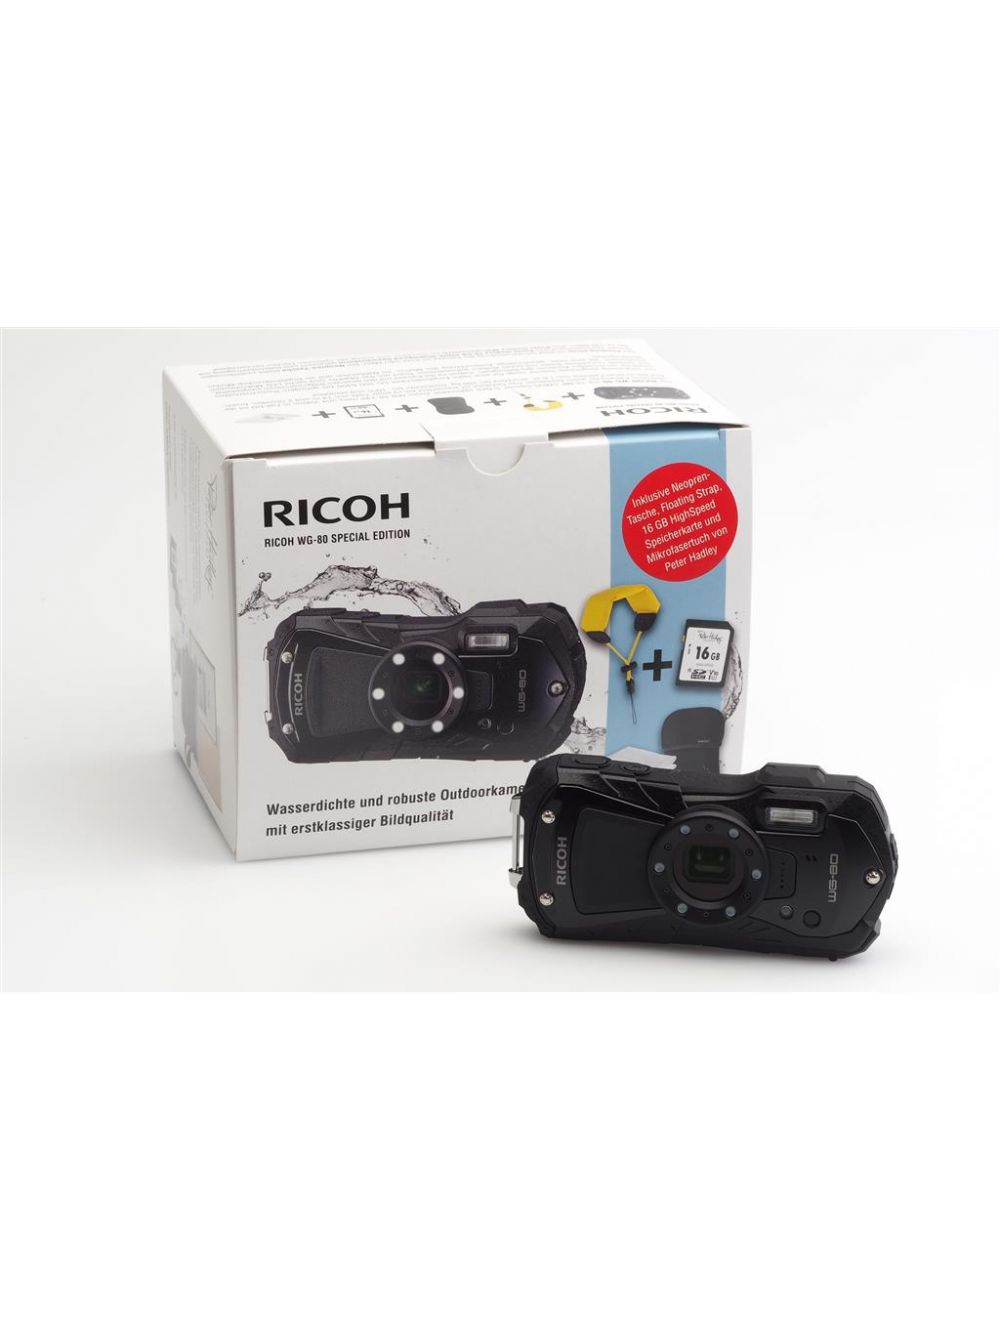 Ricoh WG-80 Kit Black 16MP 16GB SD Card Waterproof Camera JO GEIER  MINT  RARE